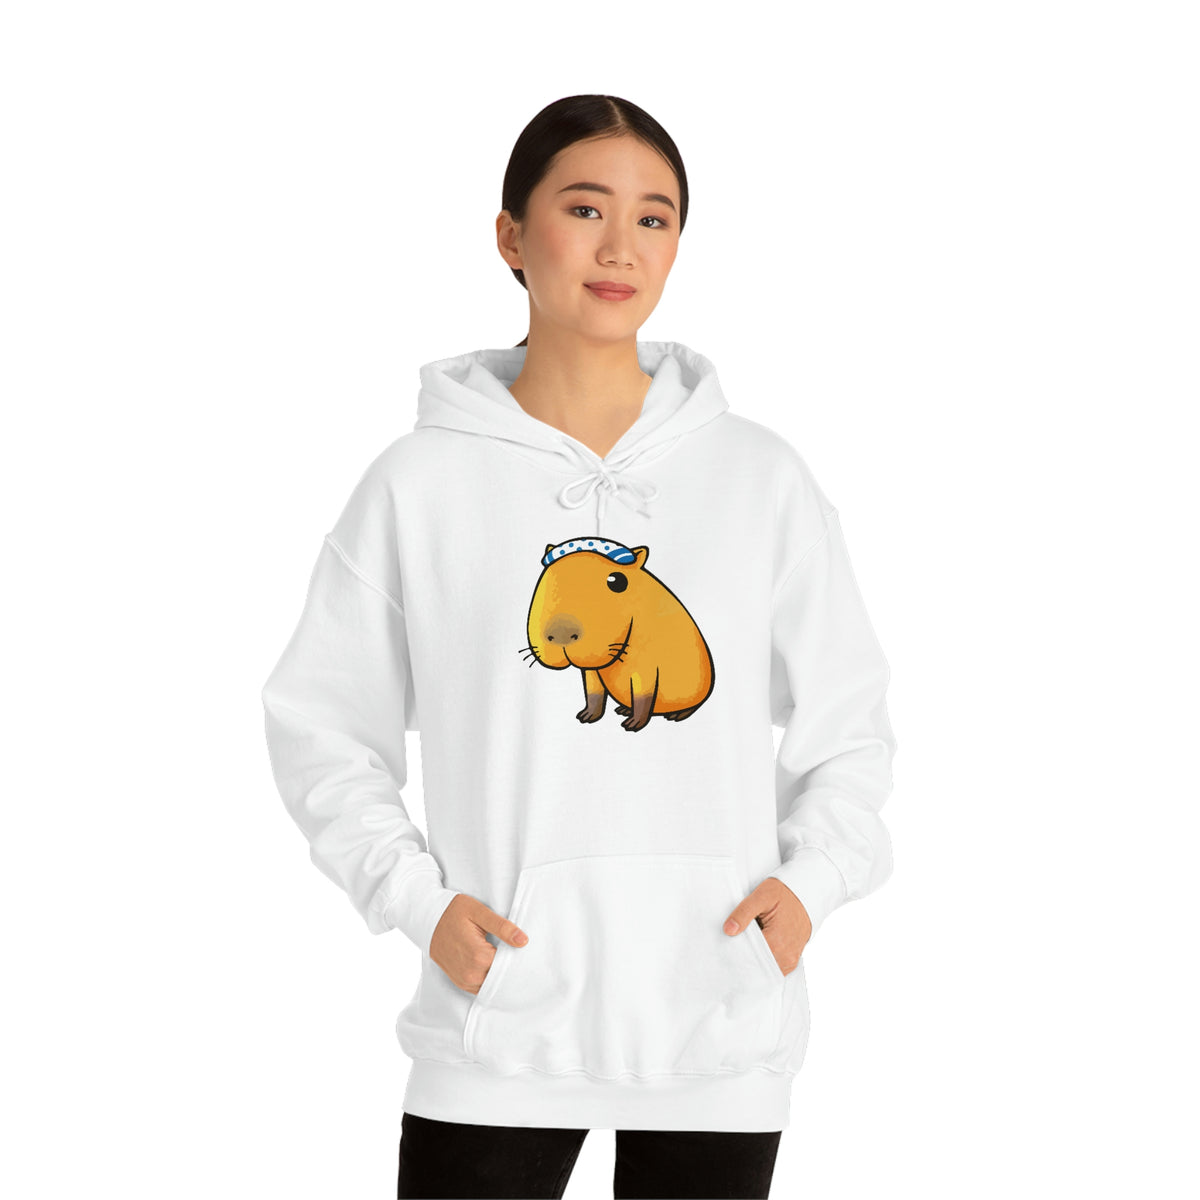 Capybara - Unisex Hoodie